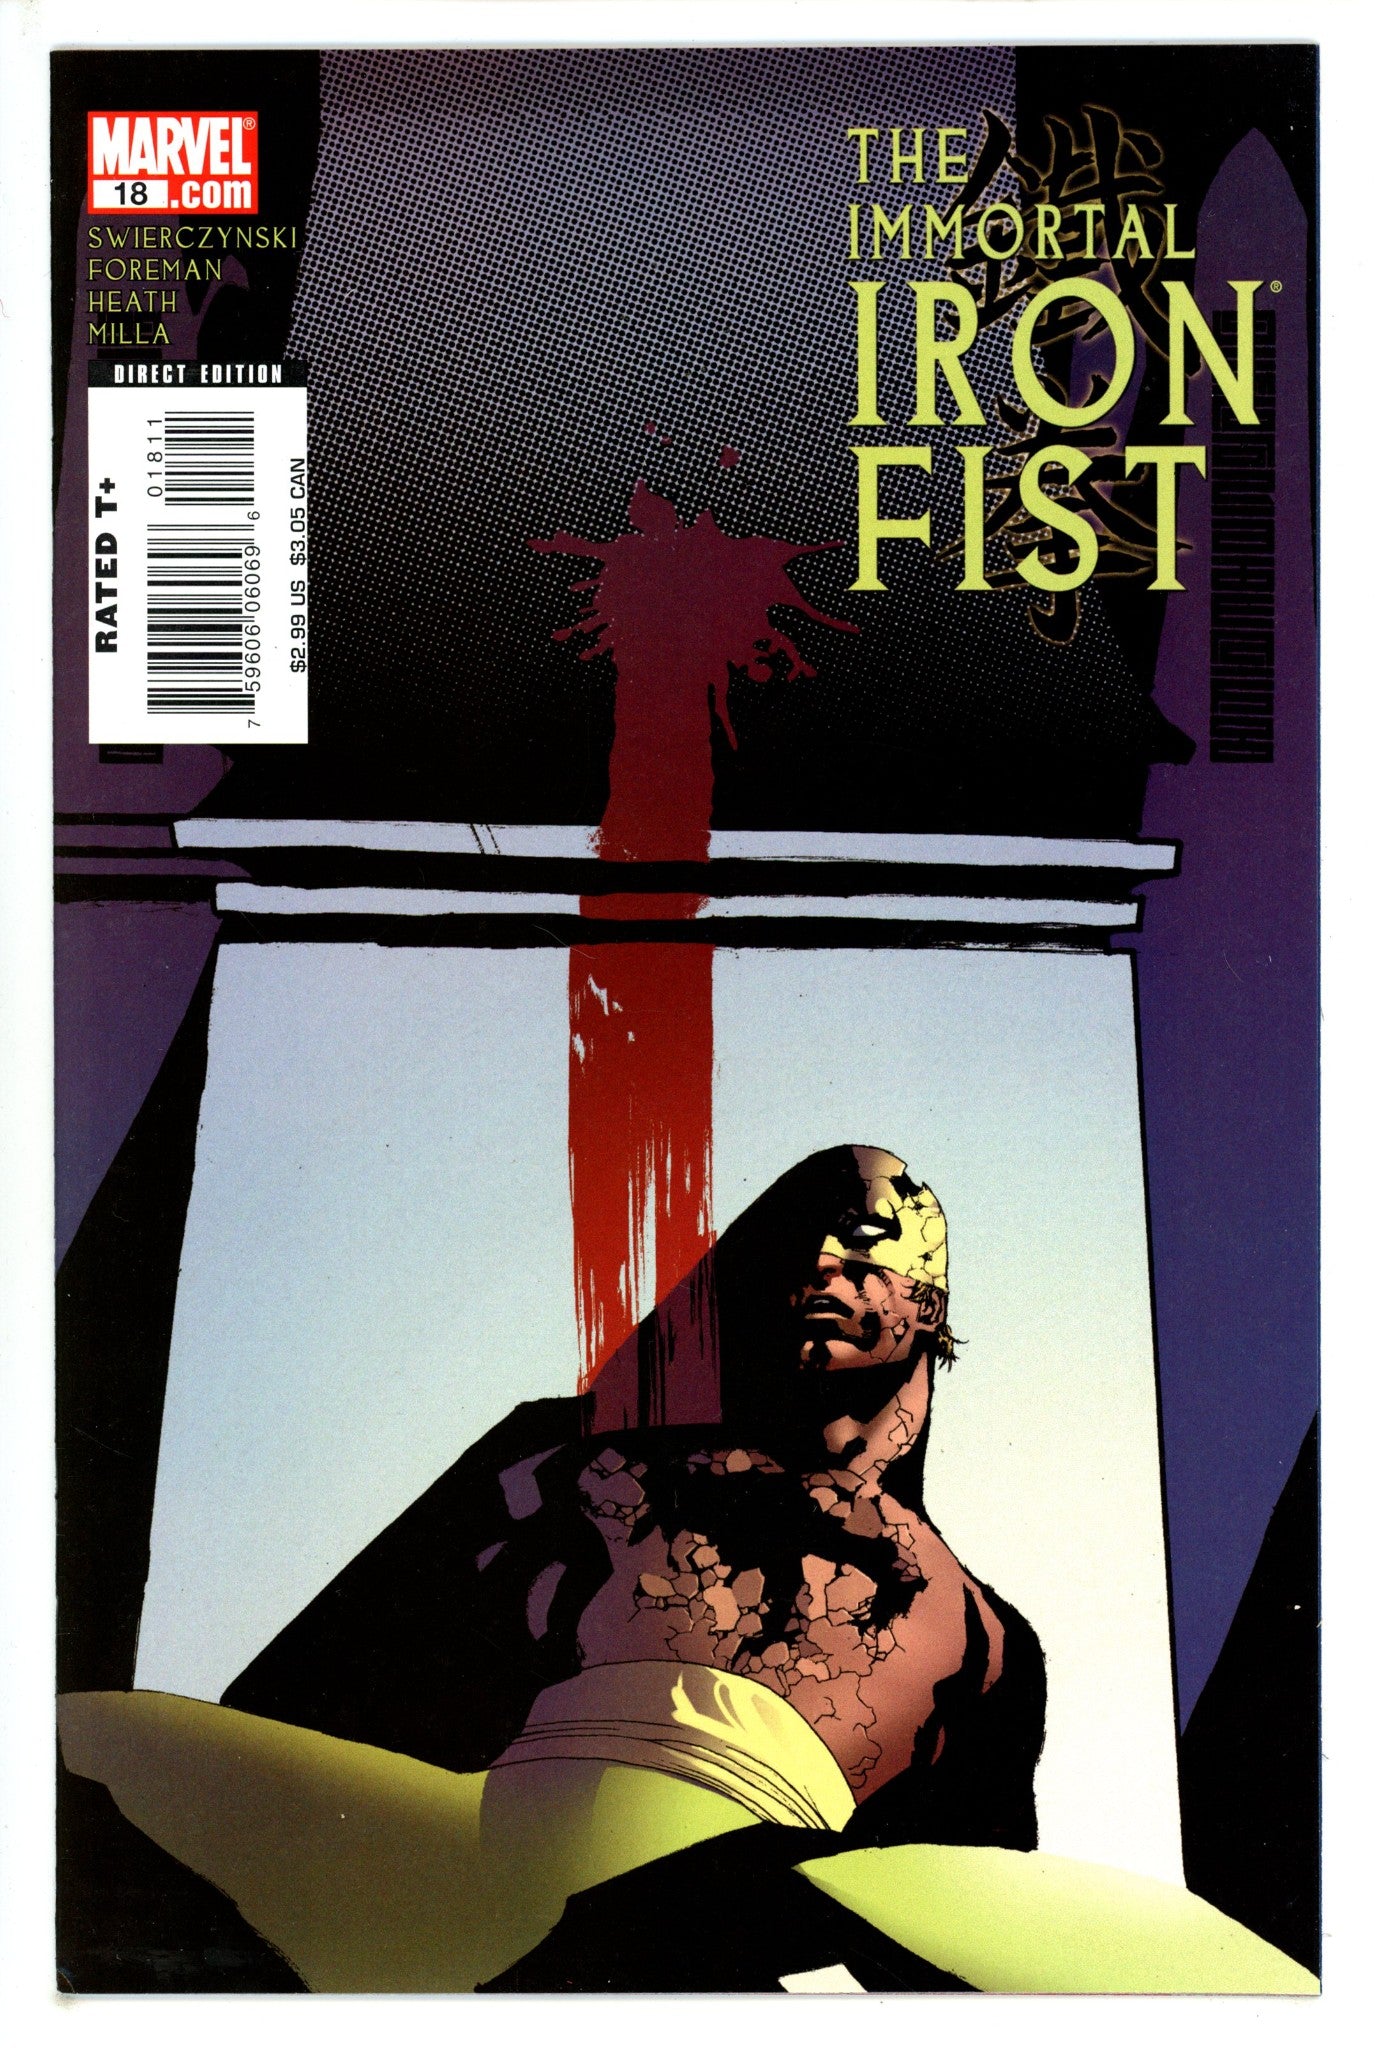 The Immortal Iron Fist 18 (2008)